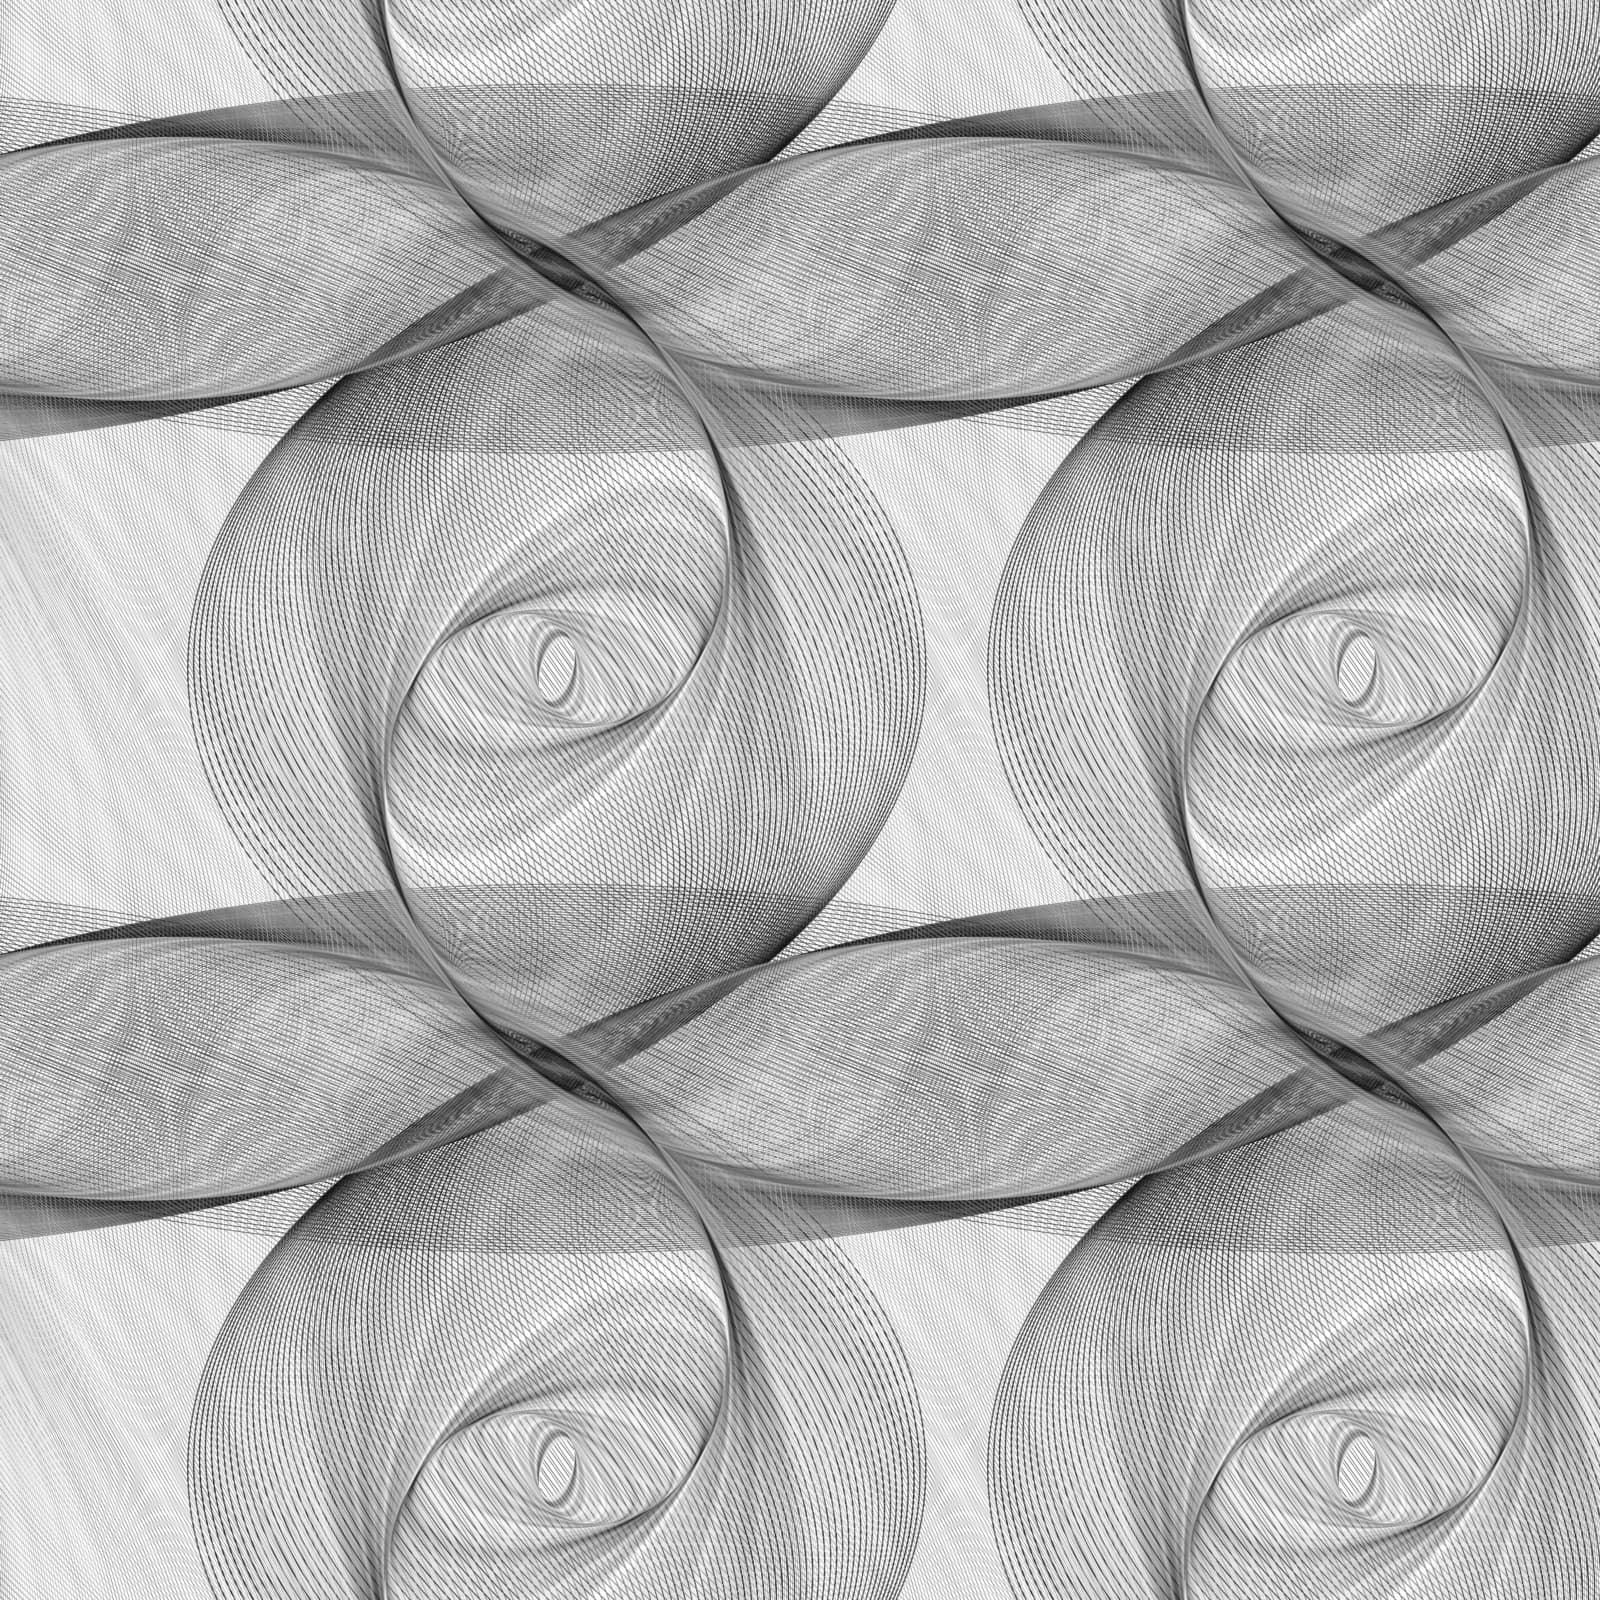 Repeating monochrome ellipse fractal pattern design background